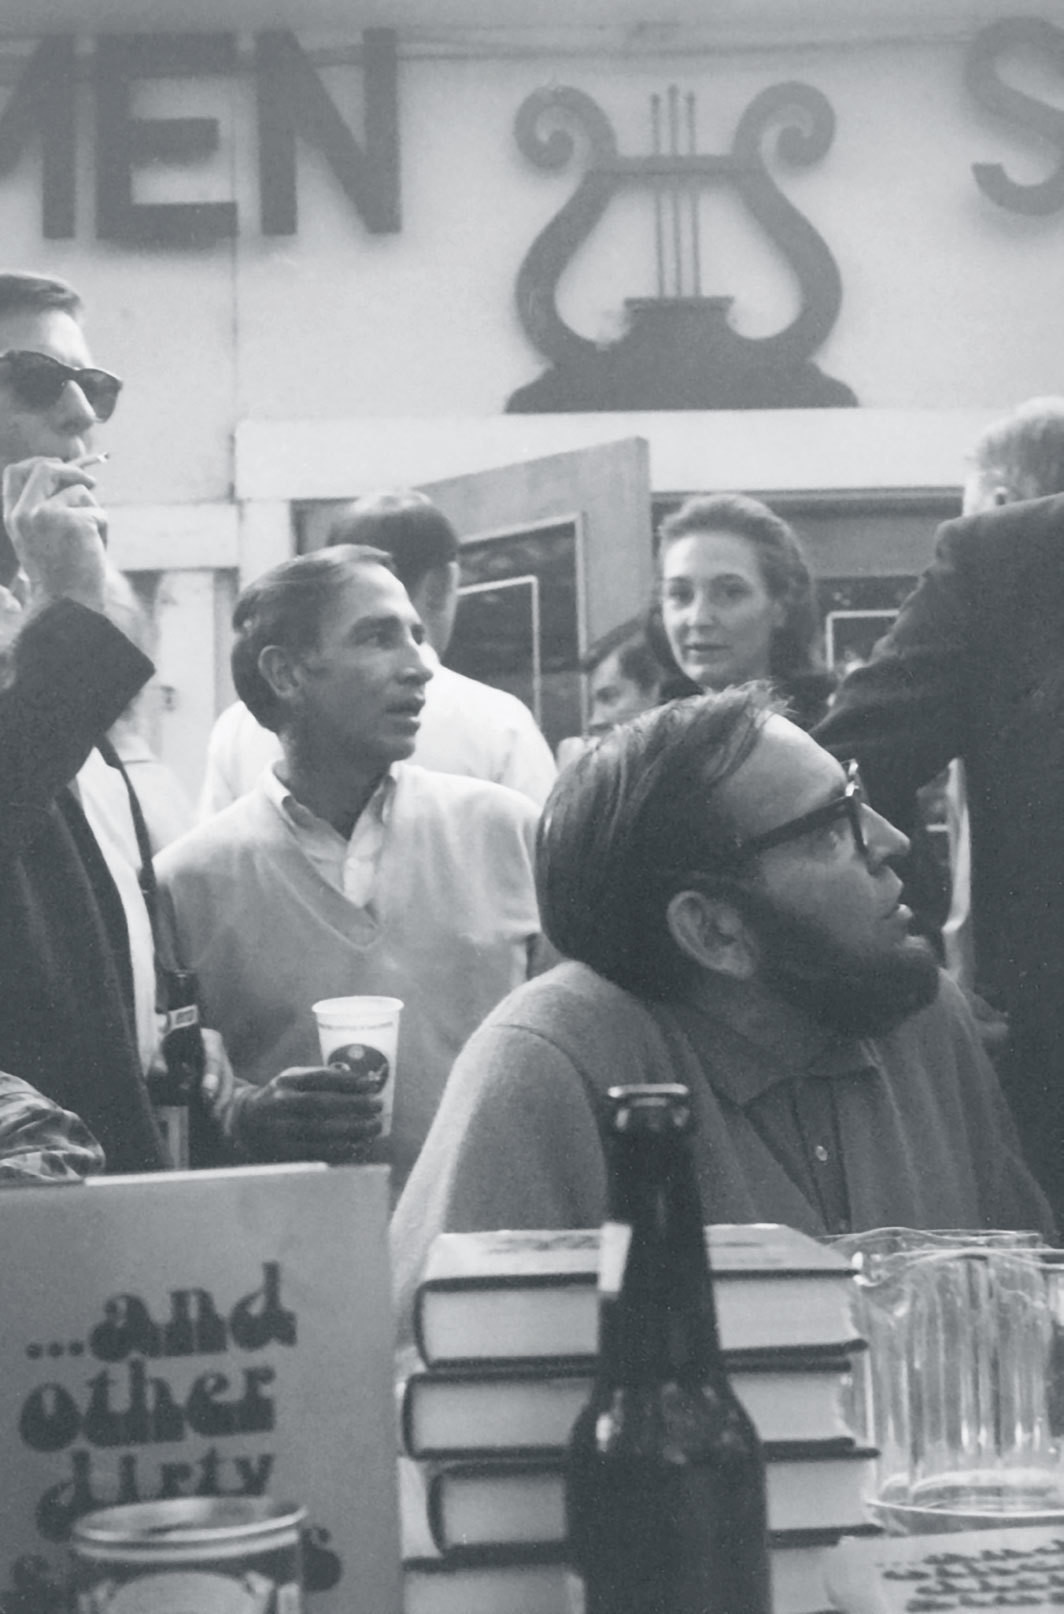 Billy Lee Brammer (second from left) and friends at Scholz Garten, Austin, Texas, 1968.